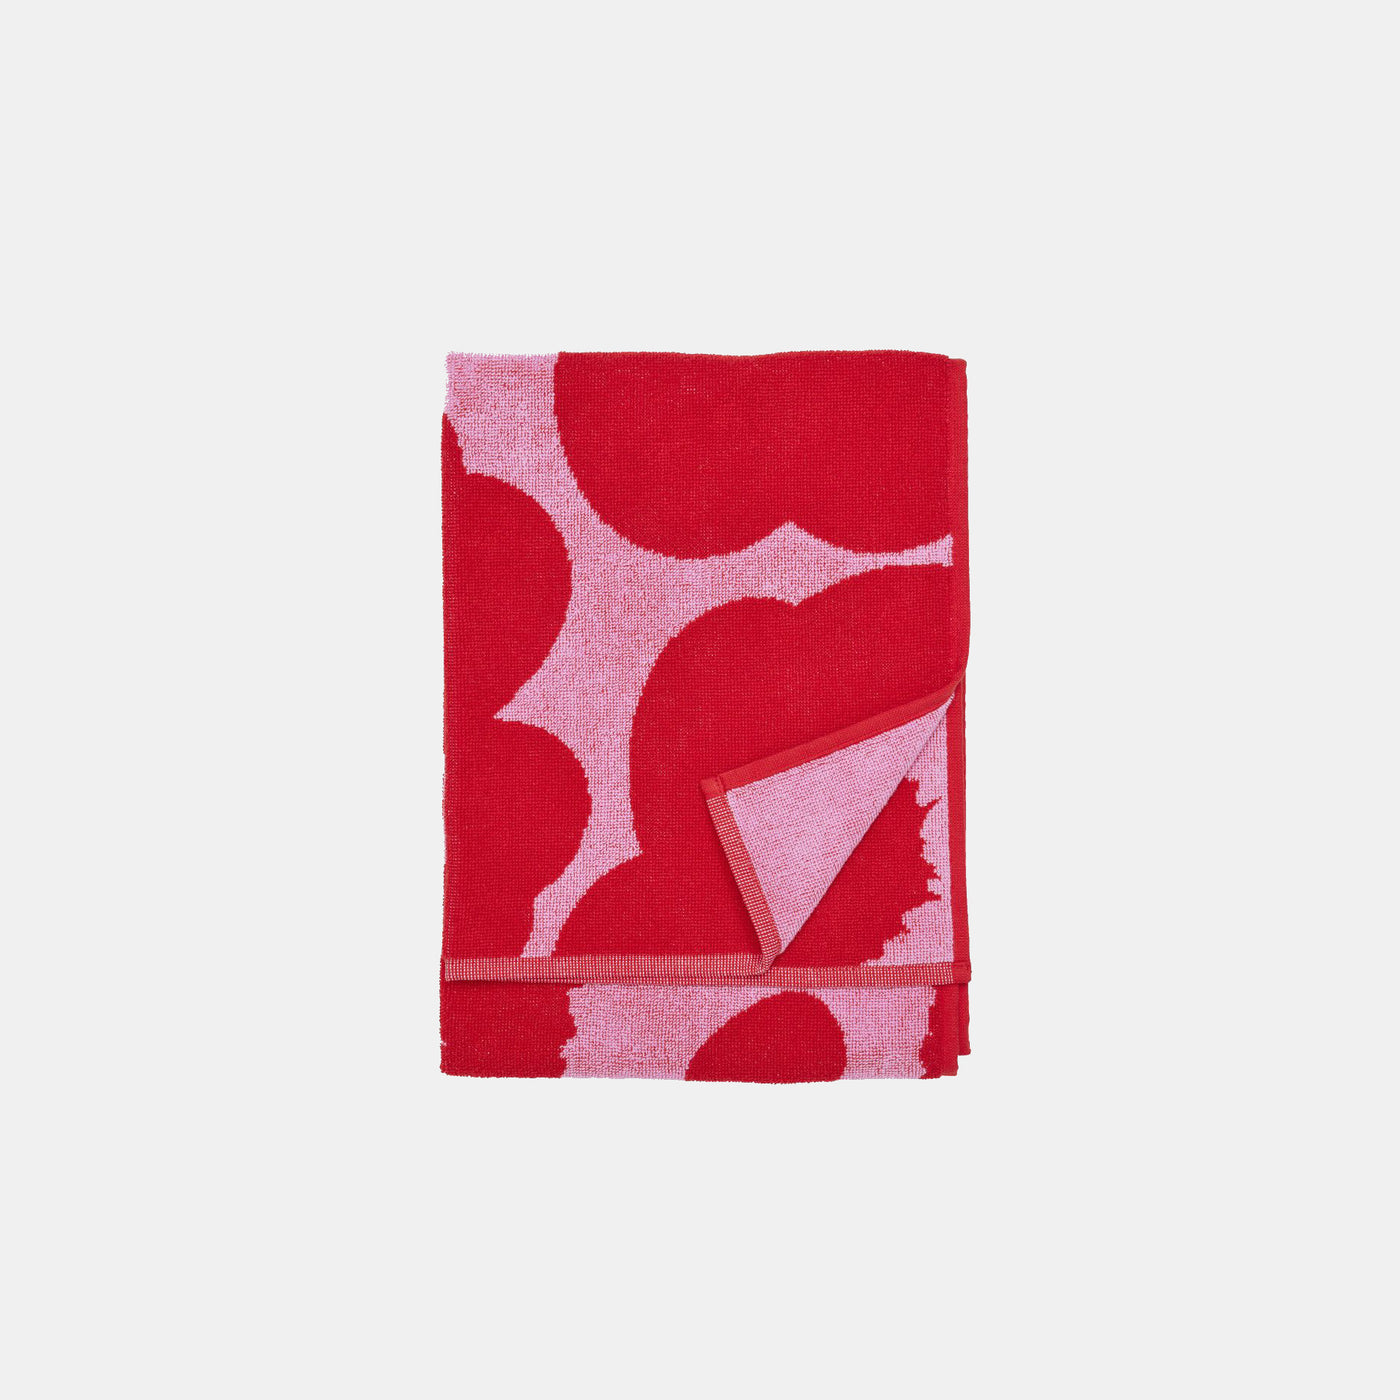 New Unikko hand towel 50x70cm - Red